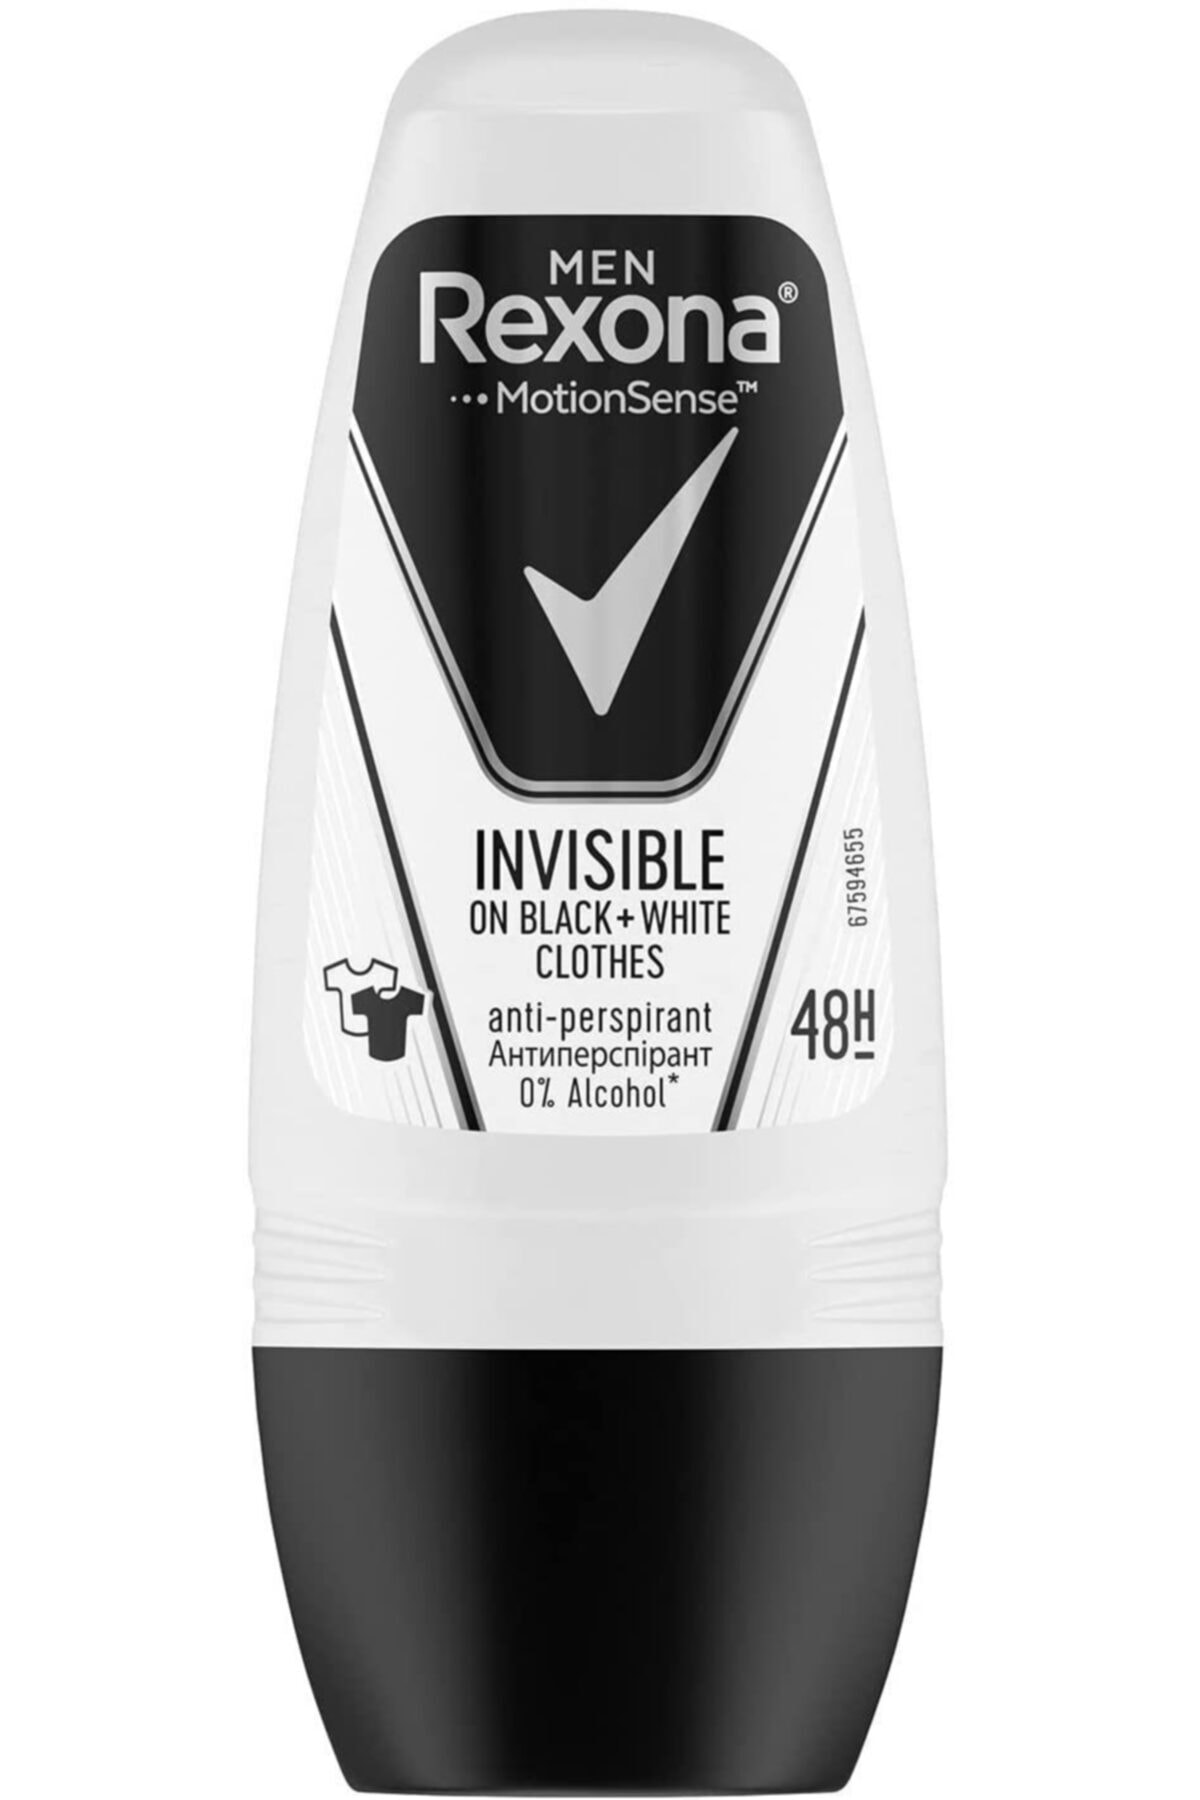 Rexona Men Erkek Anti-perspirant Roll On Invisible Black White Ter Kokusuna Karşı Koruma 50 Ml